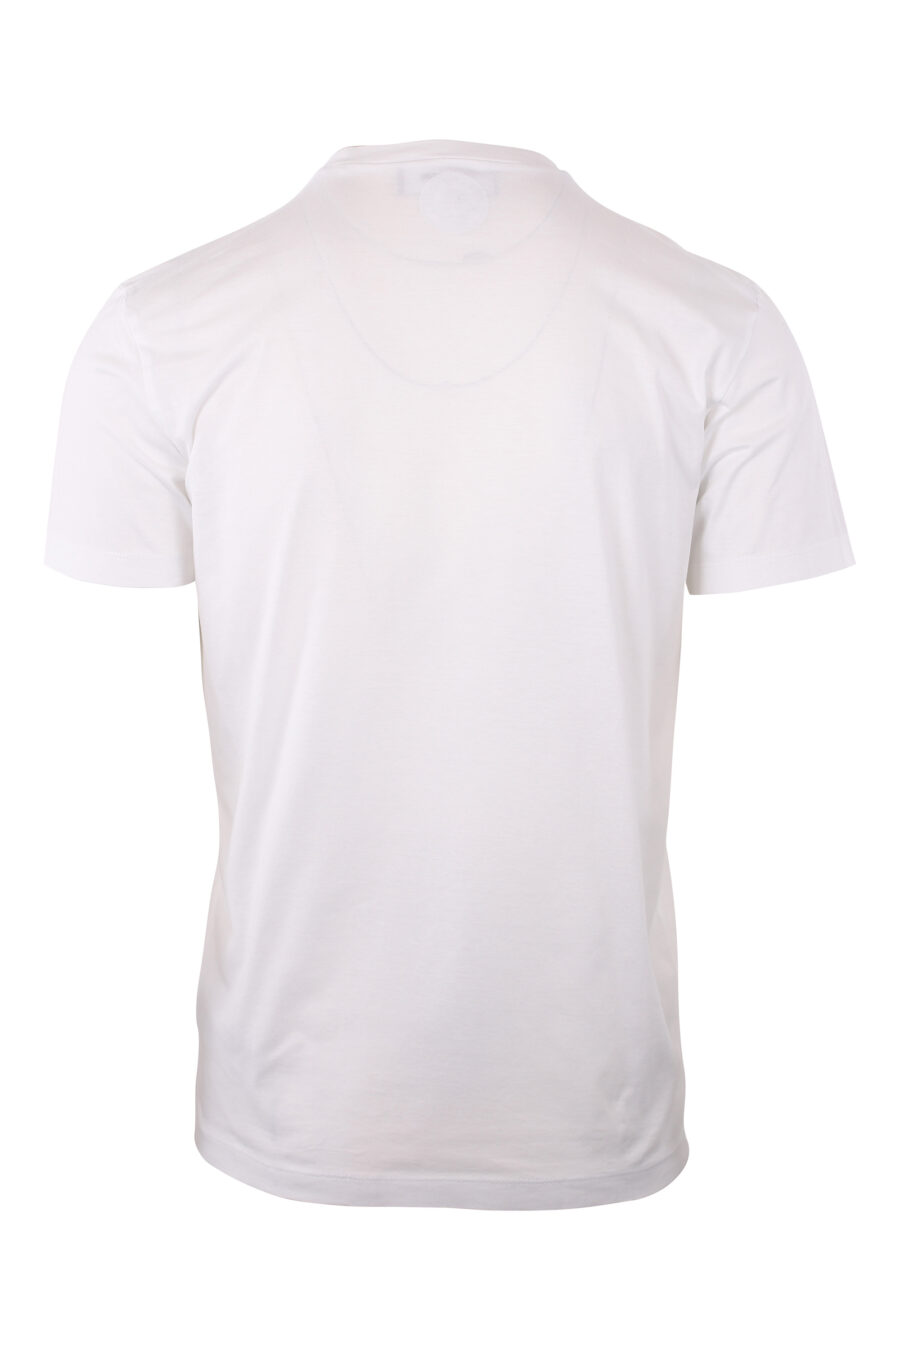 Camiseta blanca con logo "ibra" negro - IMG 2003